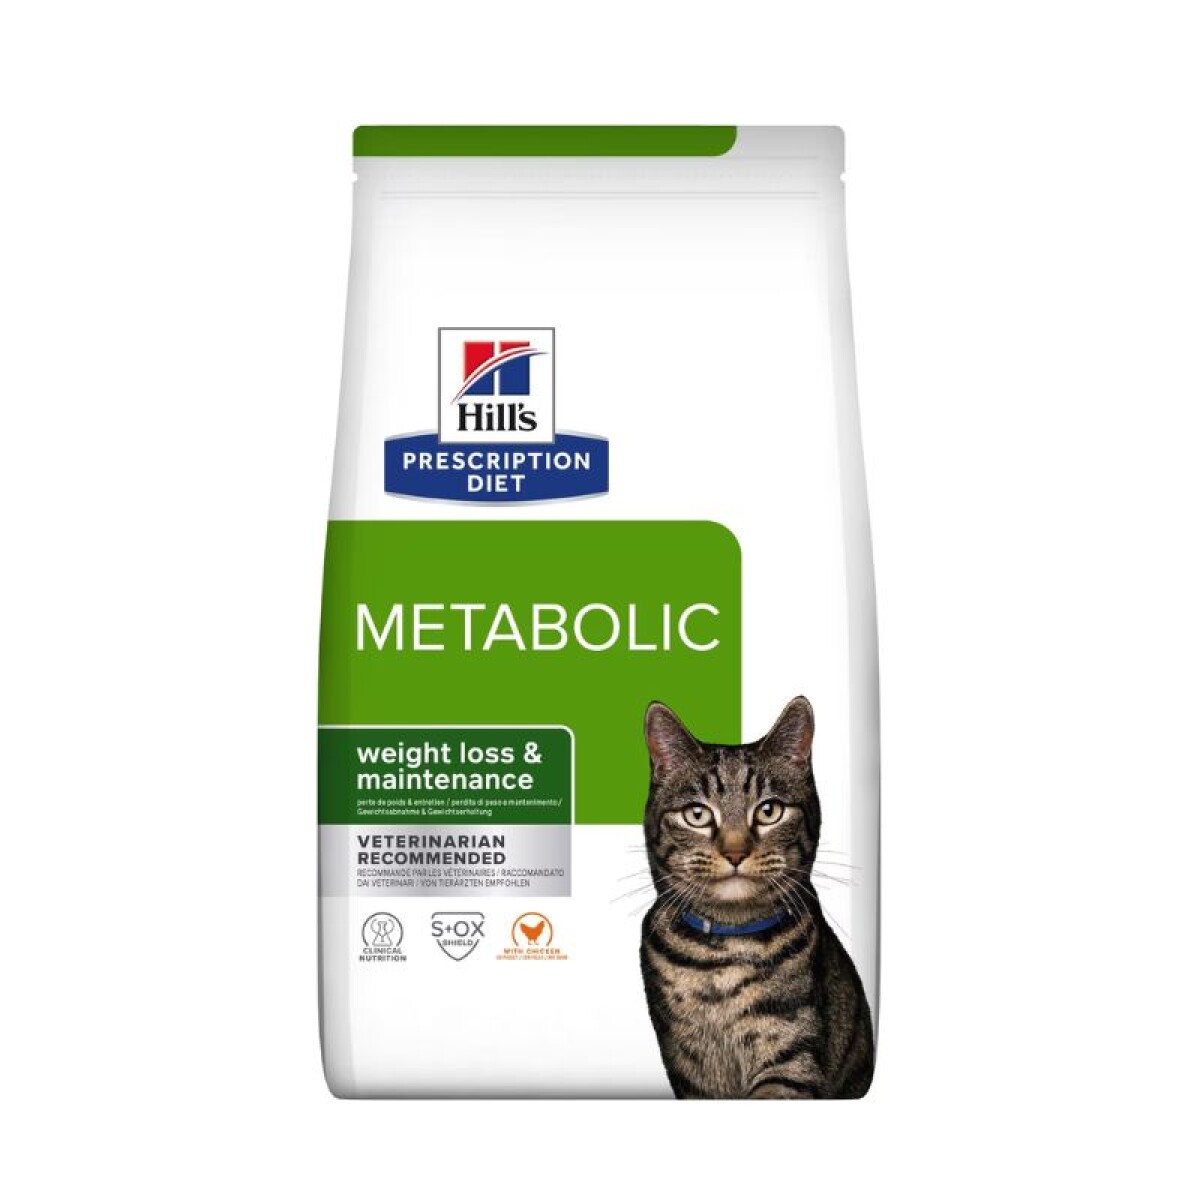 HILLS FELINE METABOLIC 1.8 KG - Hills Feline Metabolic 1.8 Kg 